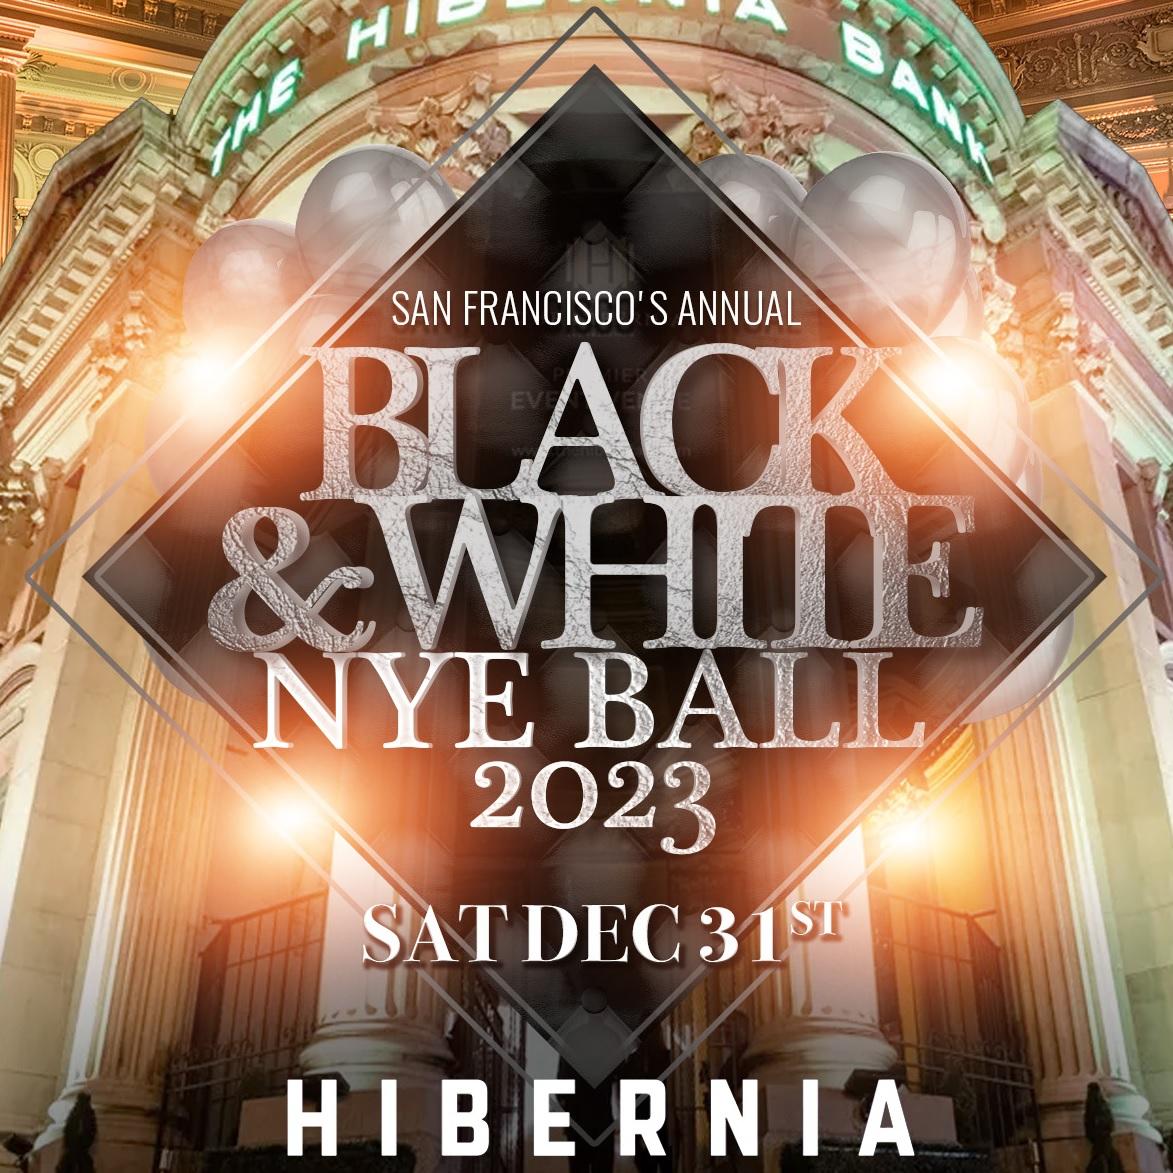 San Francisco's Annual Black & White Ball - NYE 2023